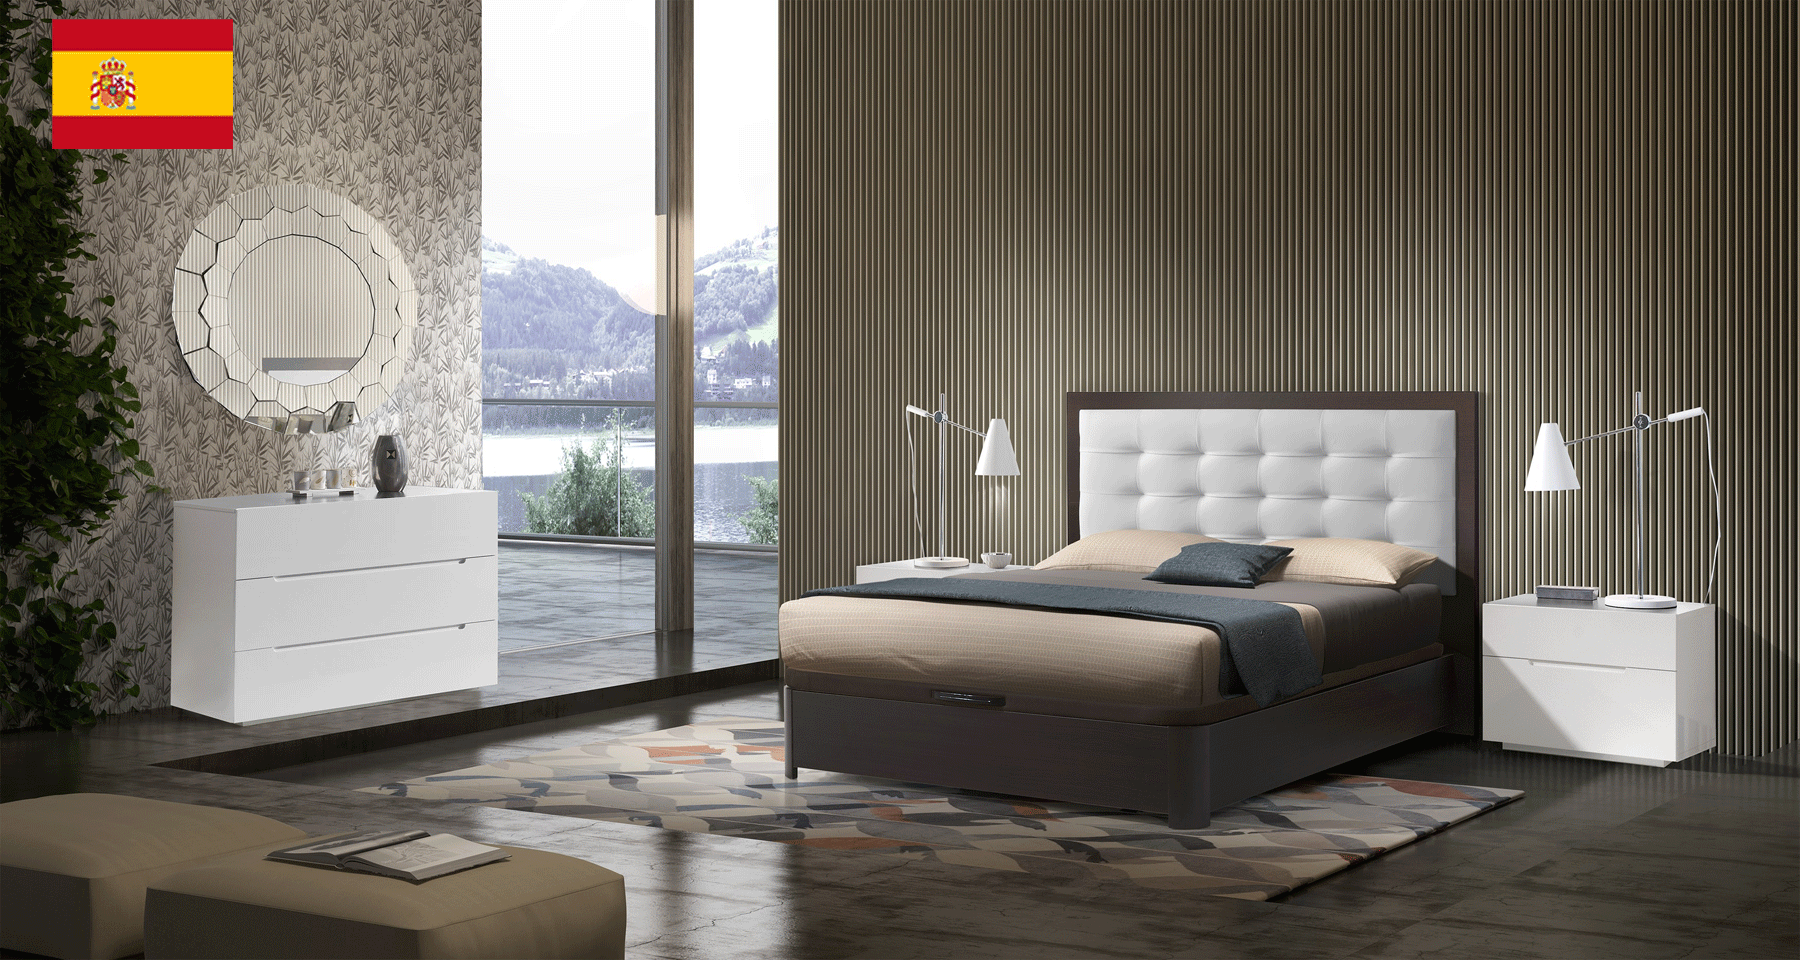 Bedroom Furniture Nightstands Regina Bedroom QS with Storage and M100, C100, E100 cases